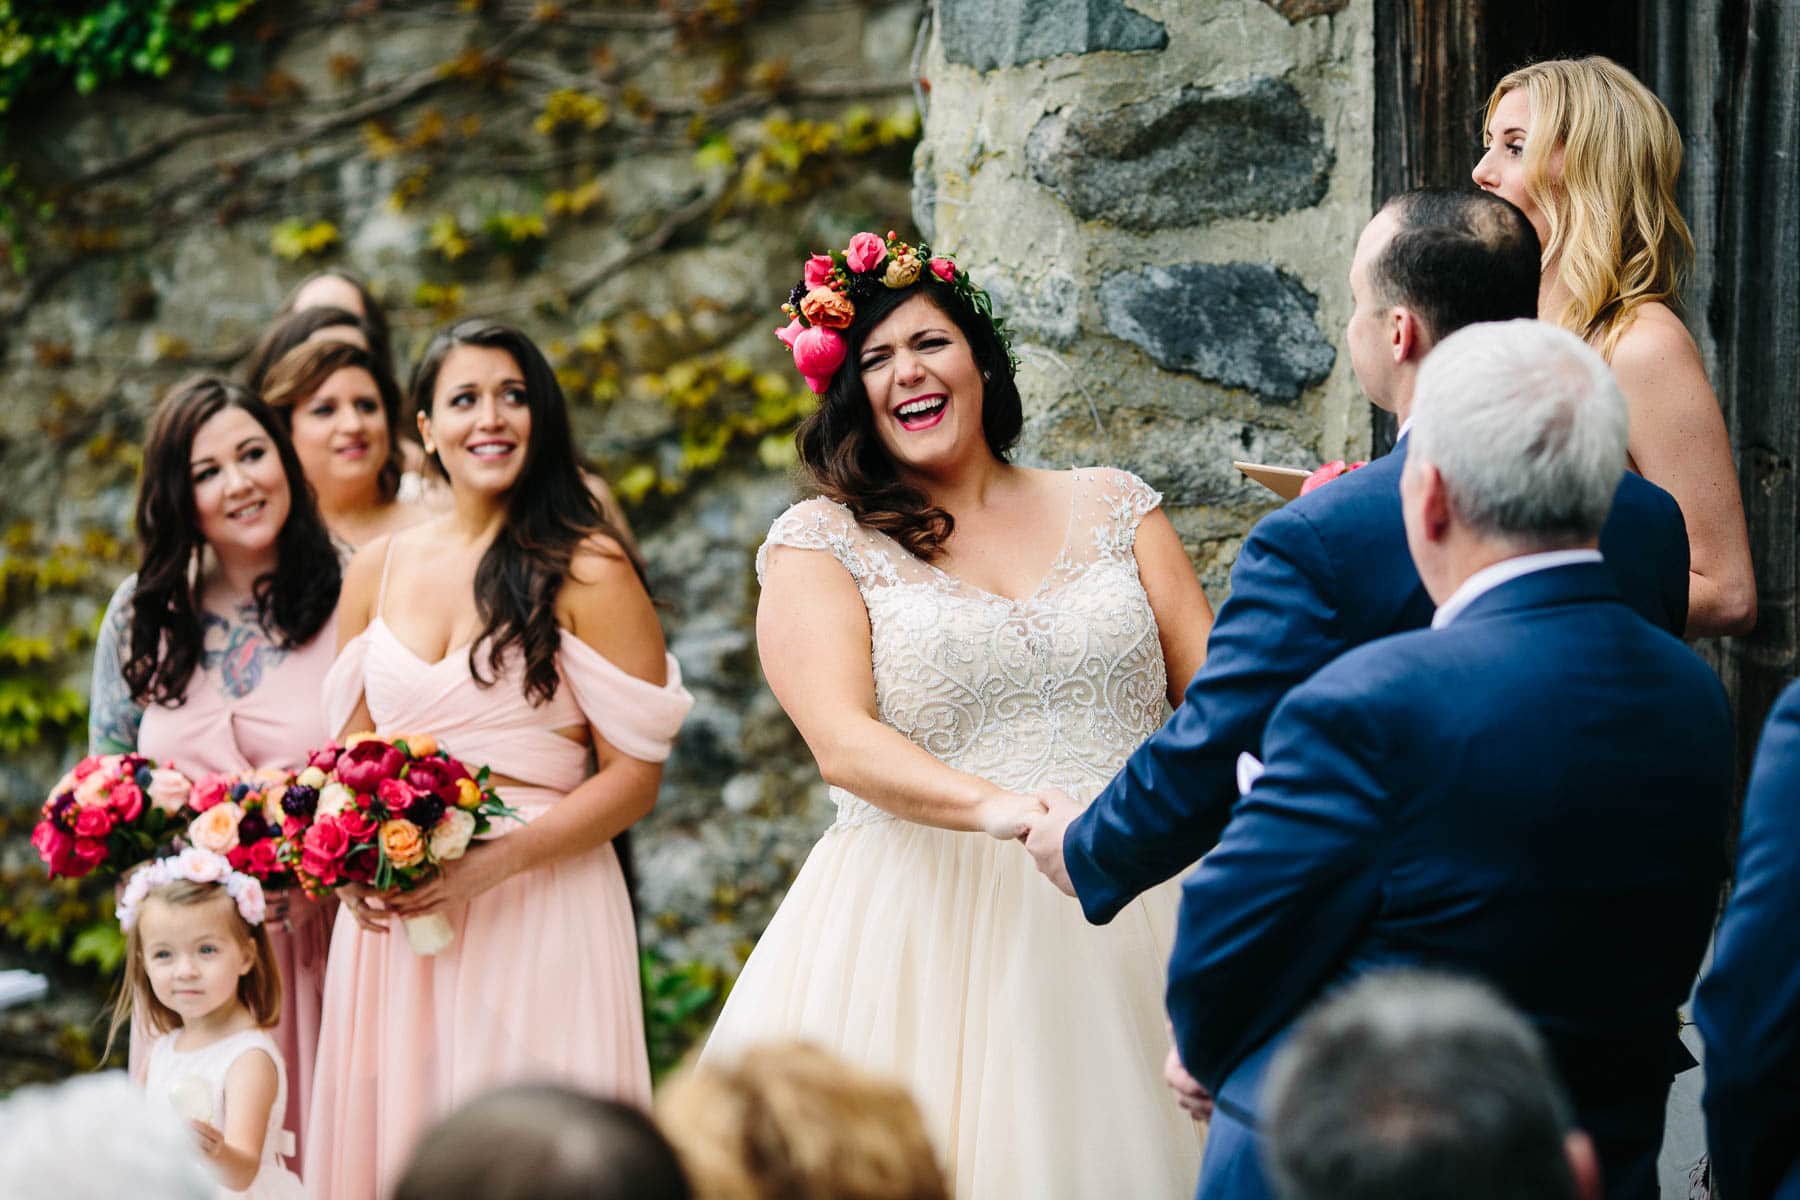 Christie and Josh's wedding at the Barn at Crane Estate in Ipswich, MA | Kelly Benvenuto Photography | Boston Wedding Photographer